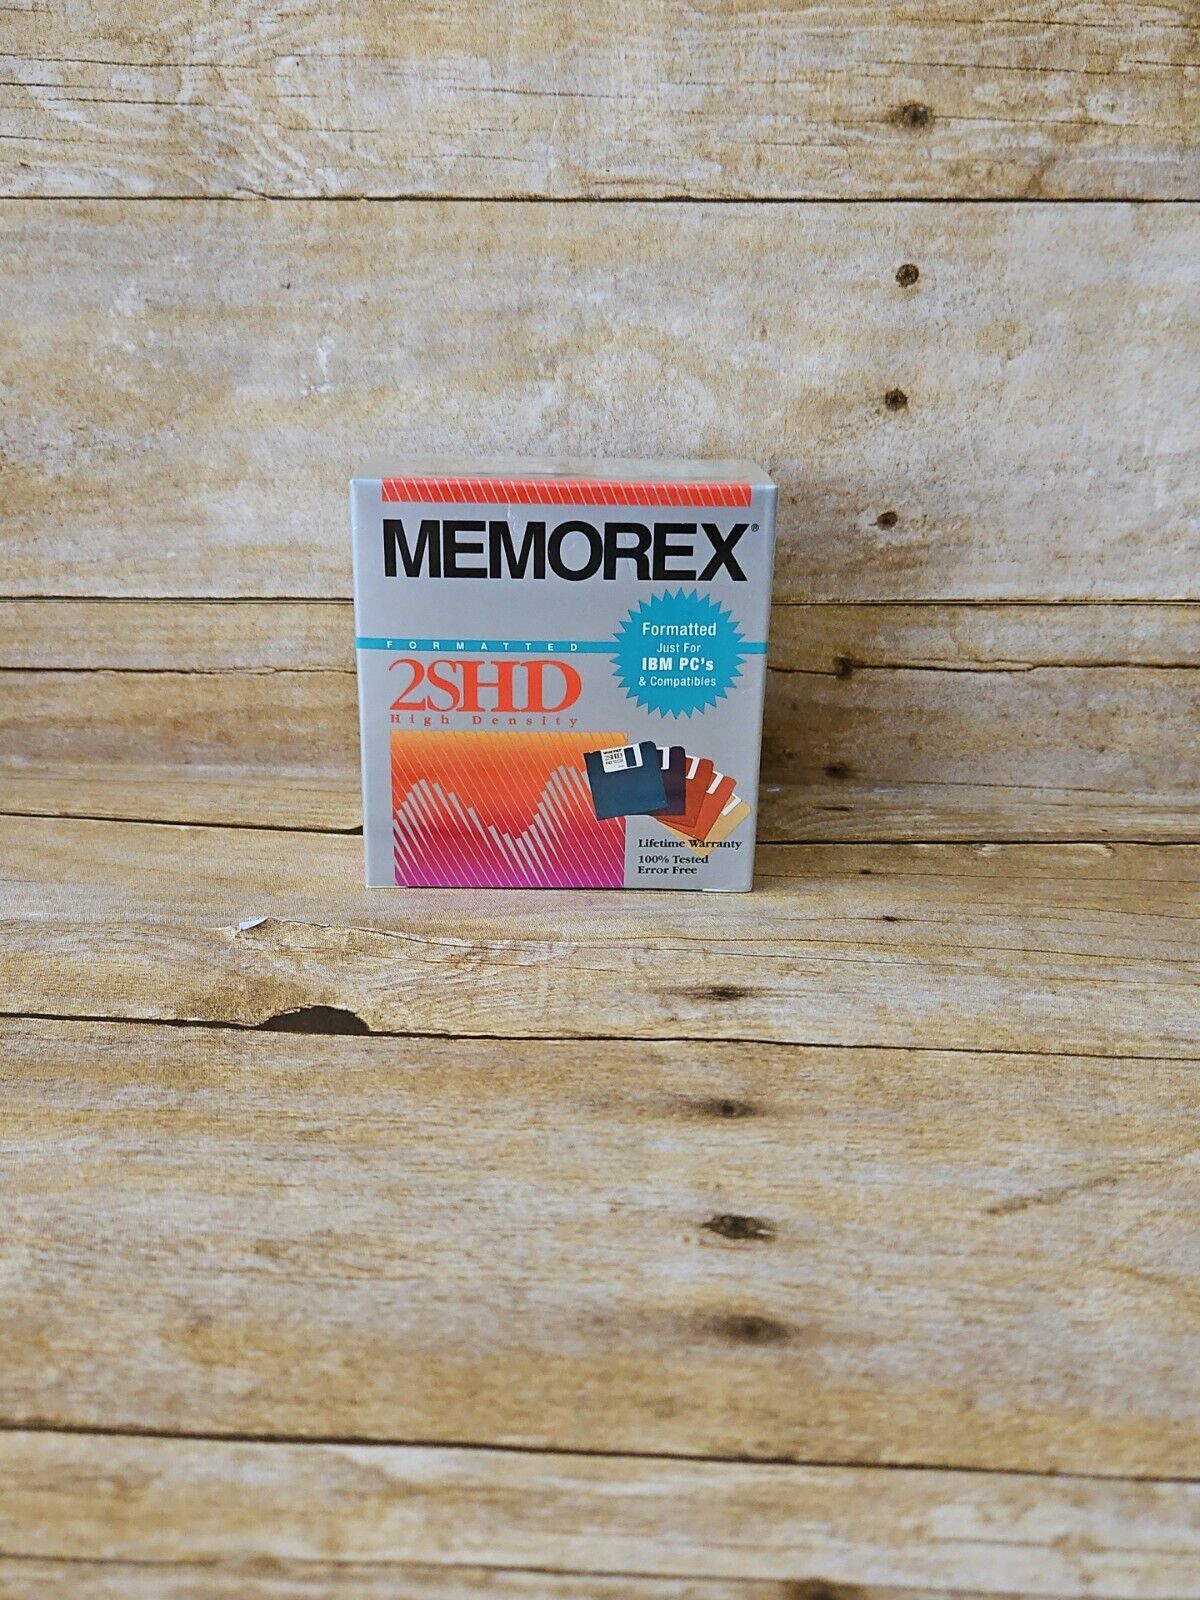 Memorex 2S/2D Double Sided High Density 5.25 Inch Flexible Disks • UNOPEN BOX